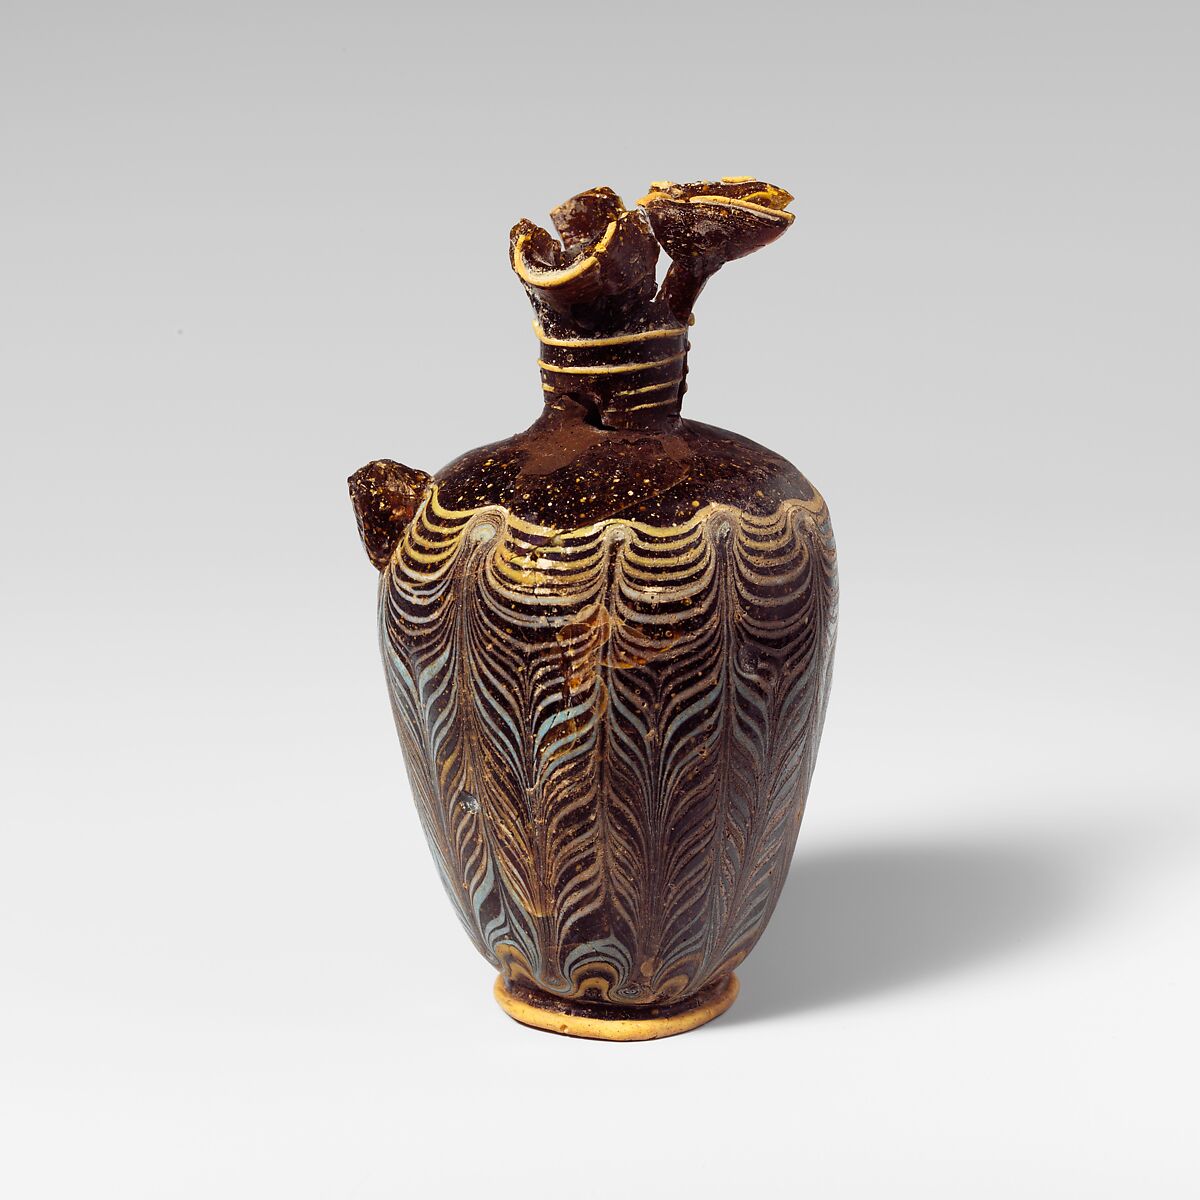 Glass oinochoe (perfume jug), Glass, Greek, Eastern Mediterranean or Italian 